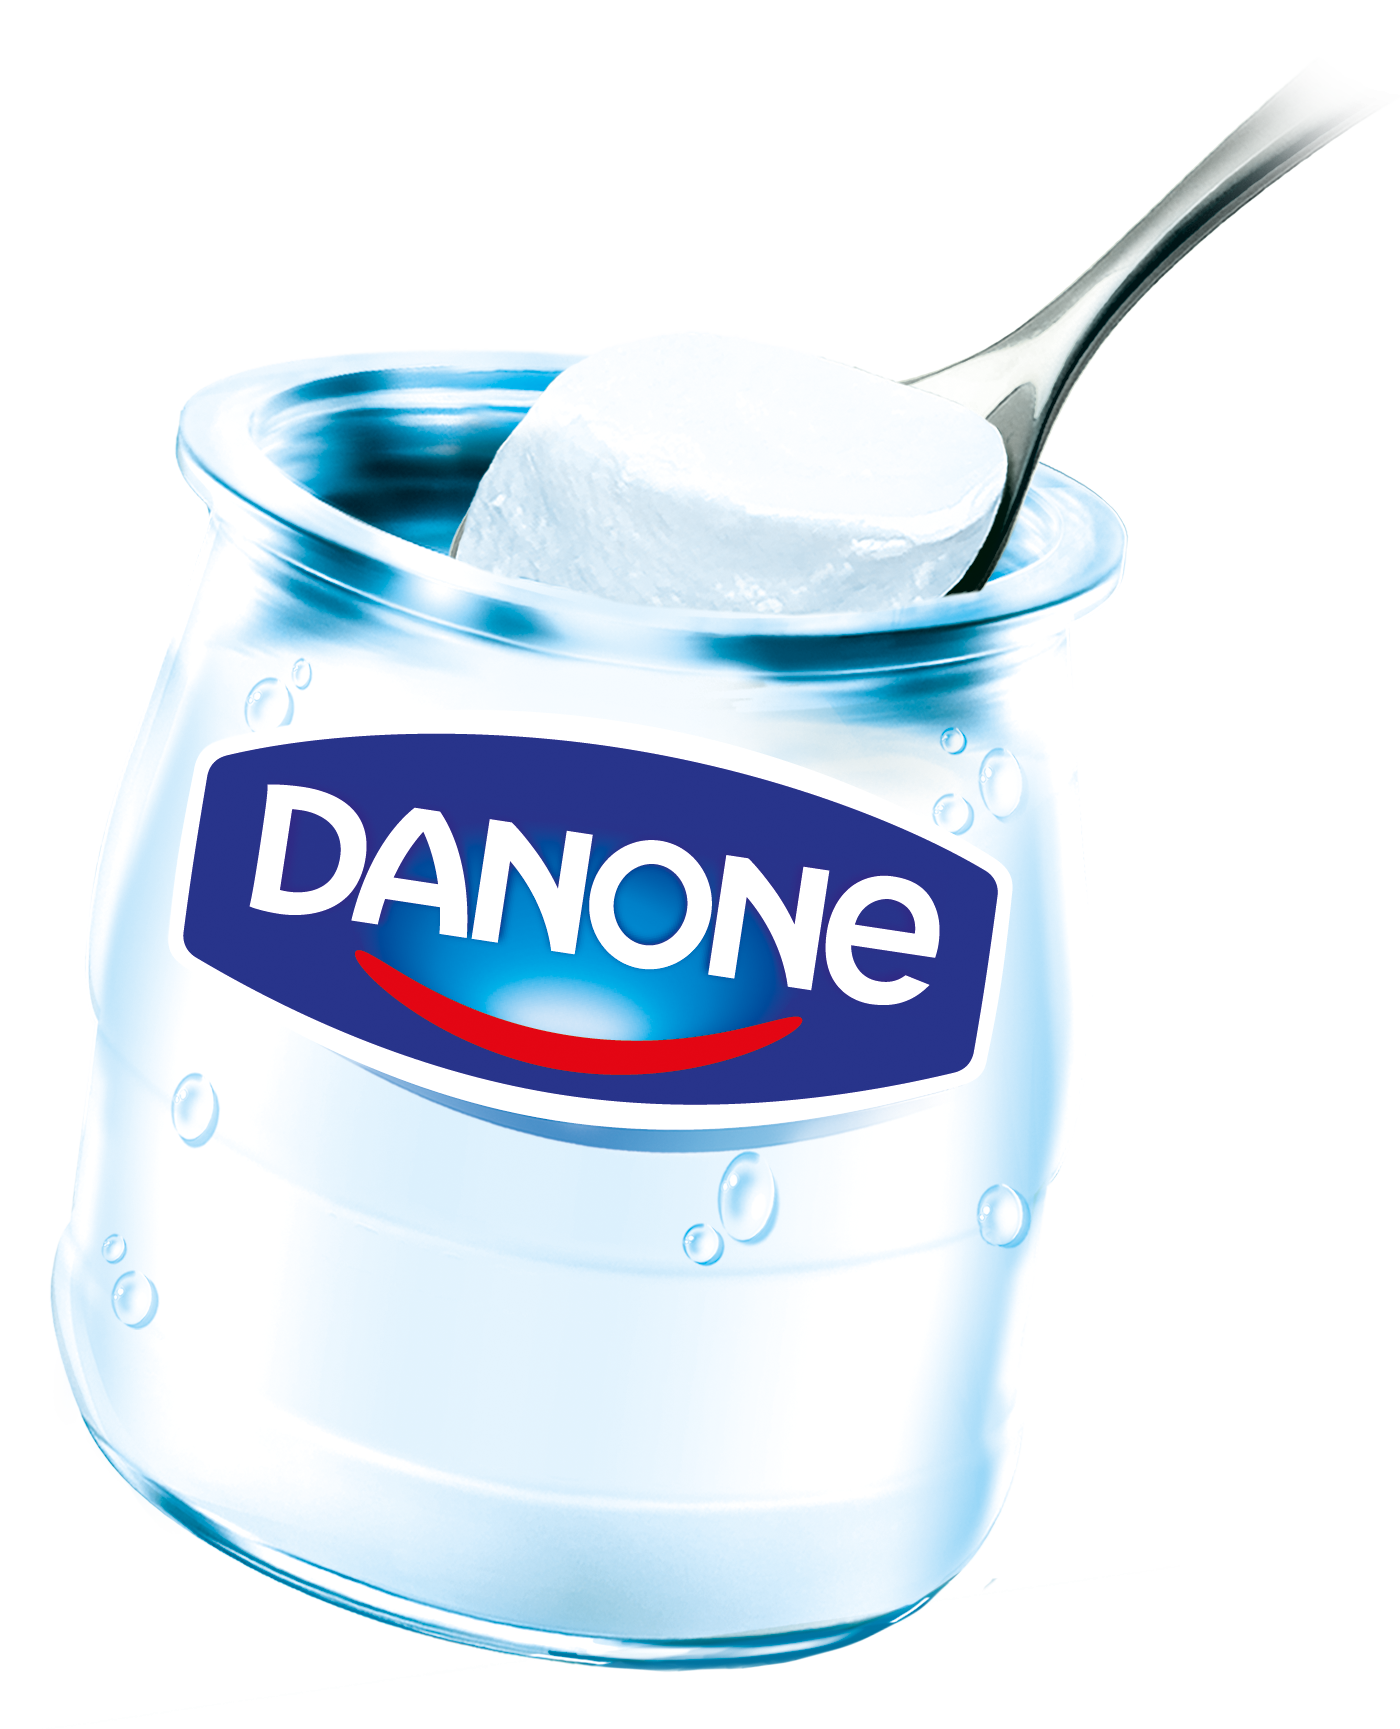 Данон. Данон логотип. Danone продукция. Йогурт Данон.